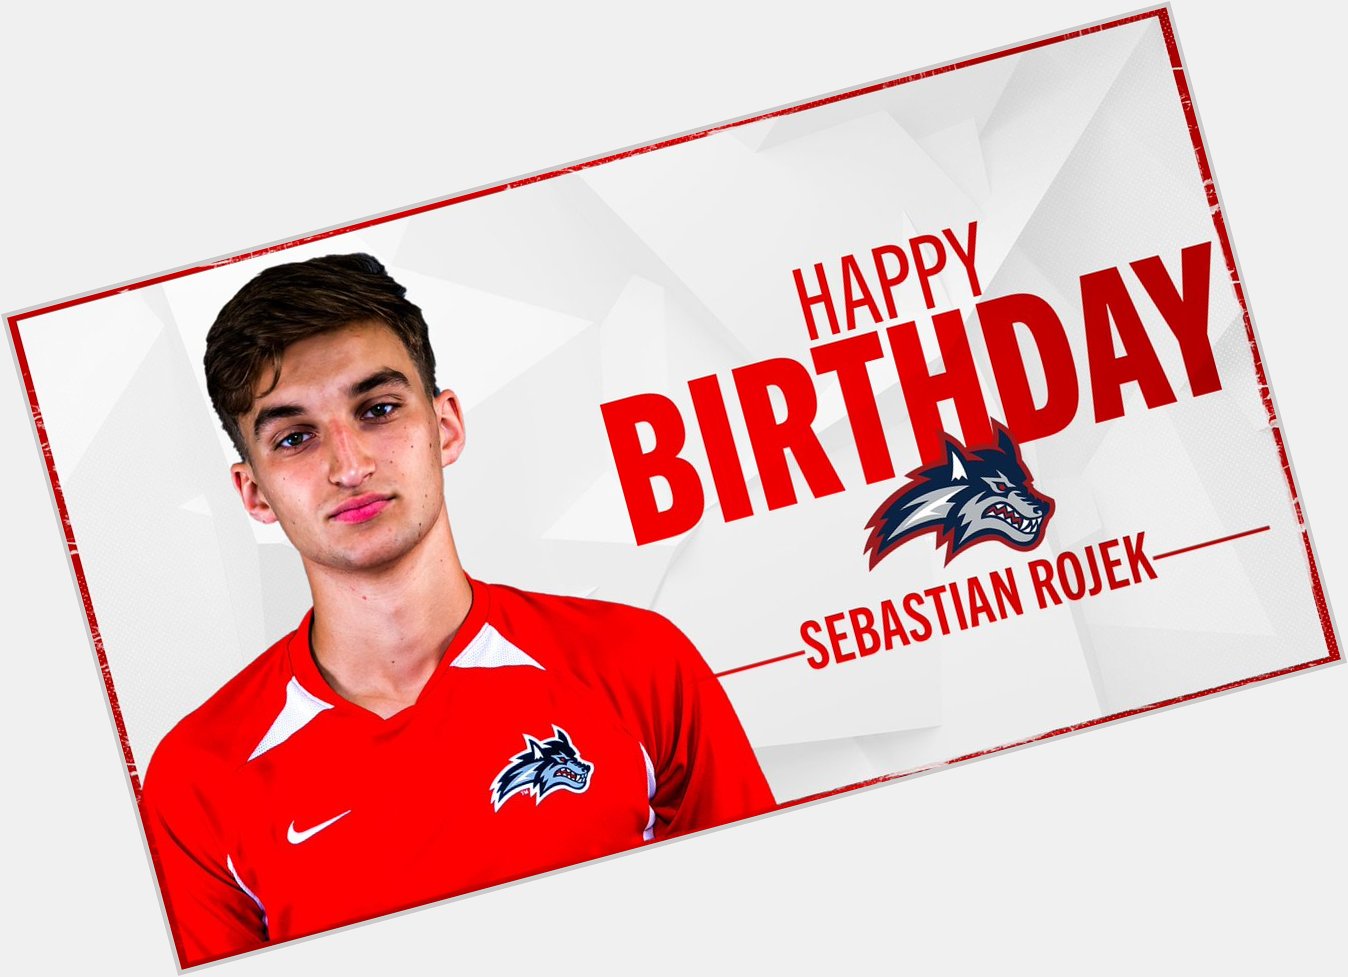 Happy birthday to our guy Sebastian Rojek! 